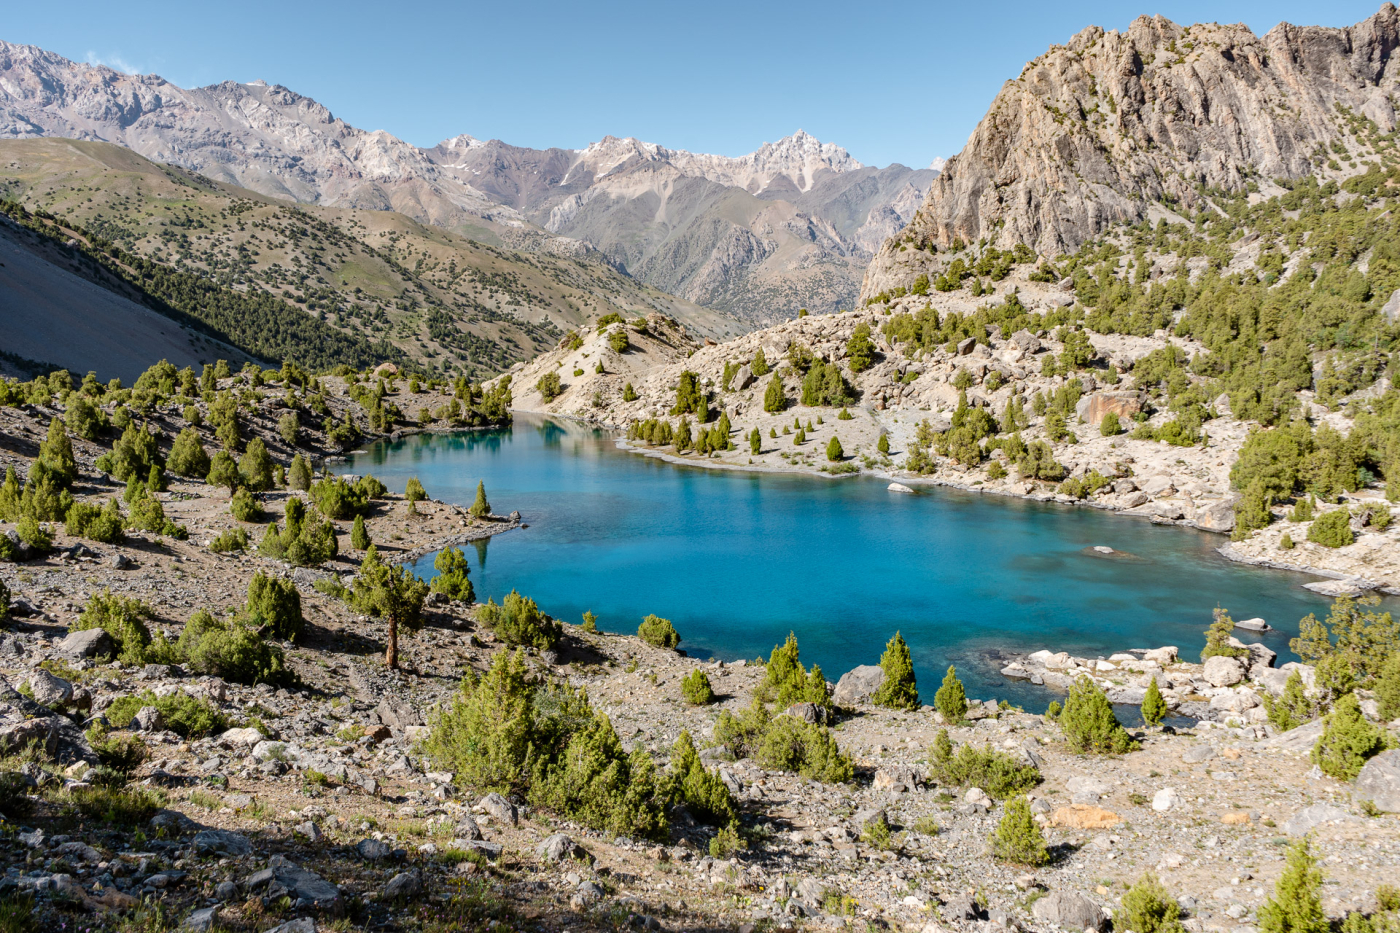 Fann mountains - the pearl of Tajikistan